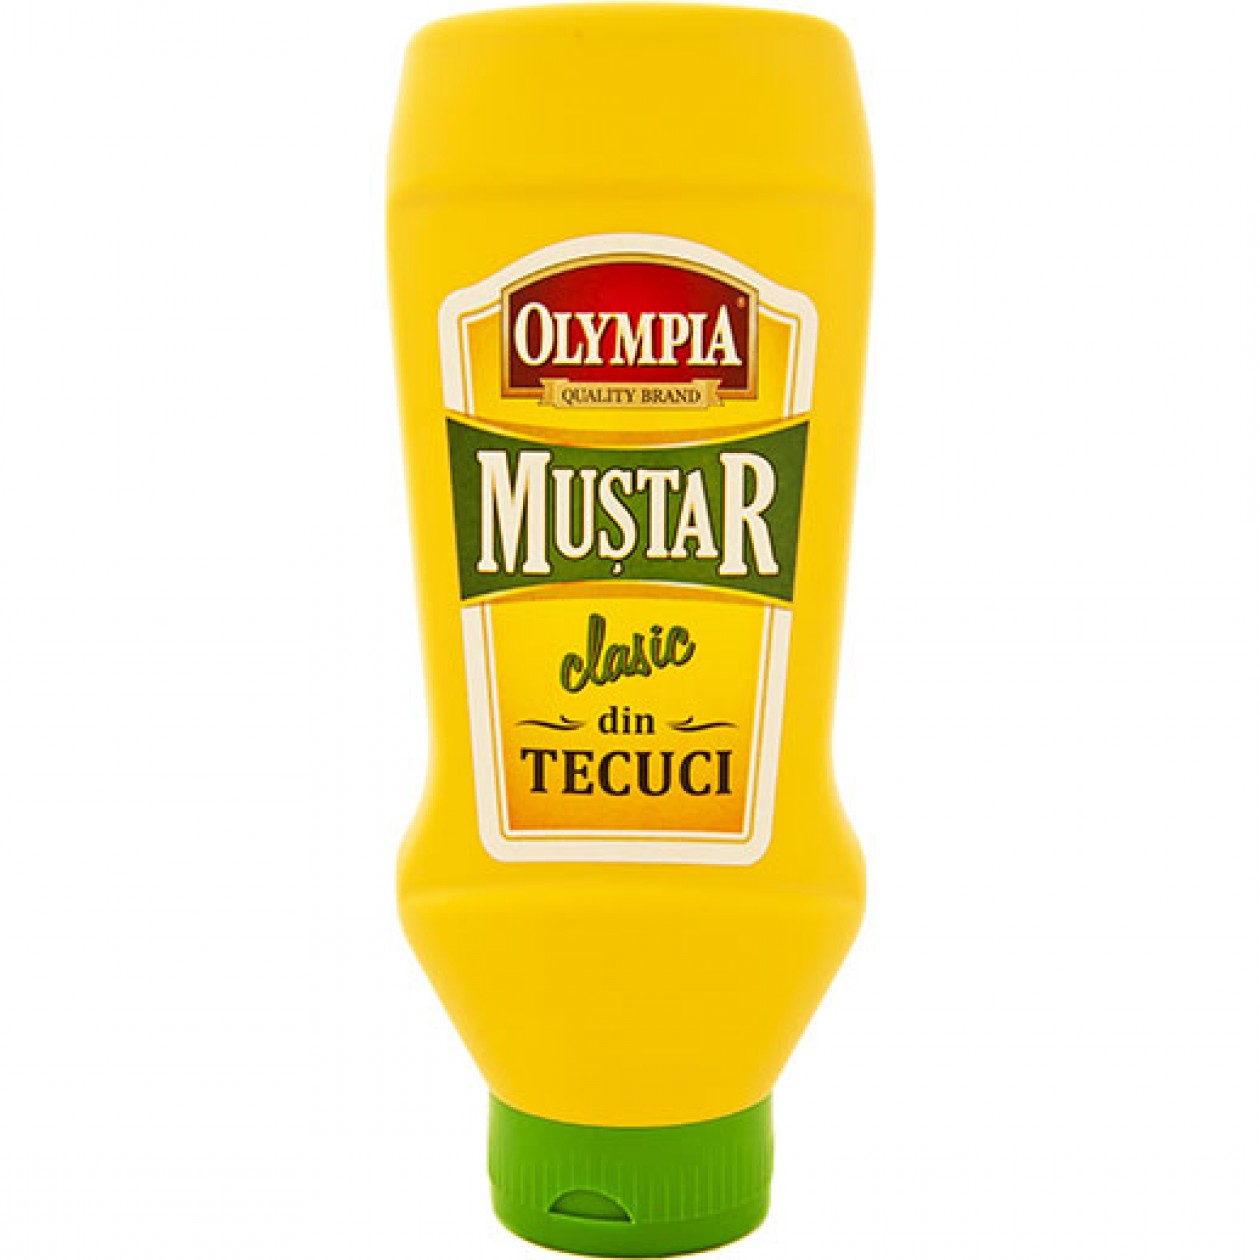 Olympia Mustard Classic 6x500g